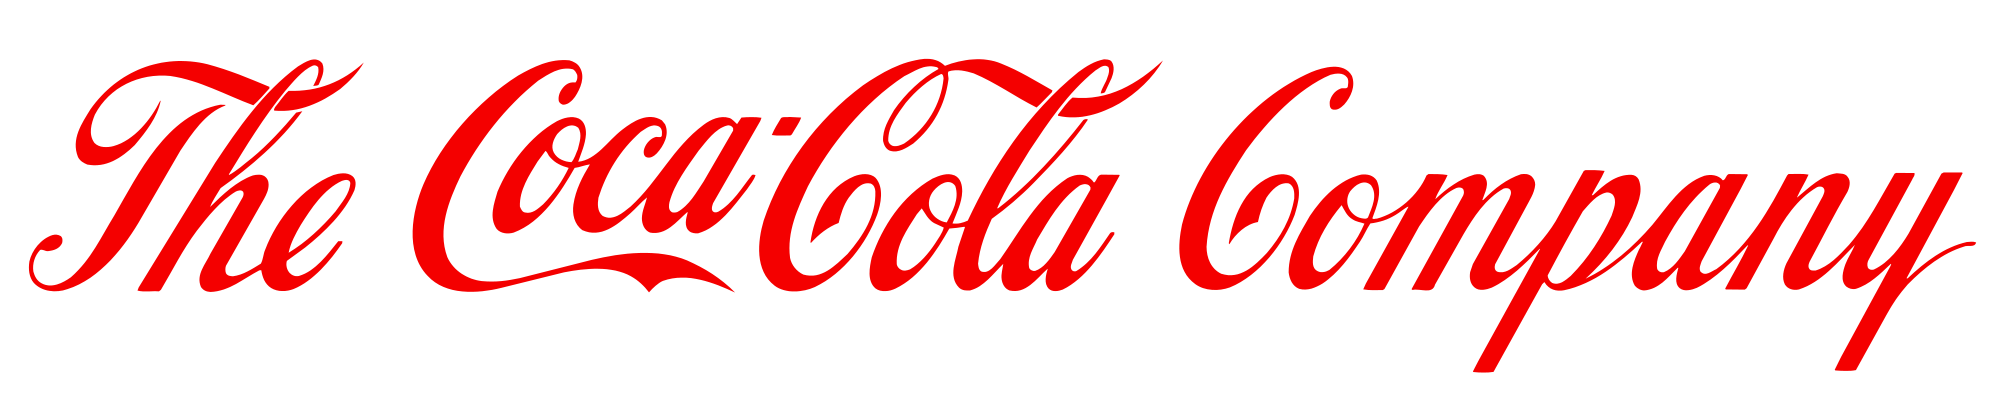 the-coca-cola-comphany